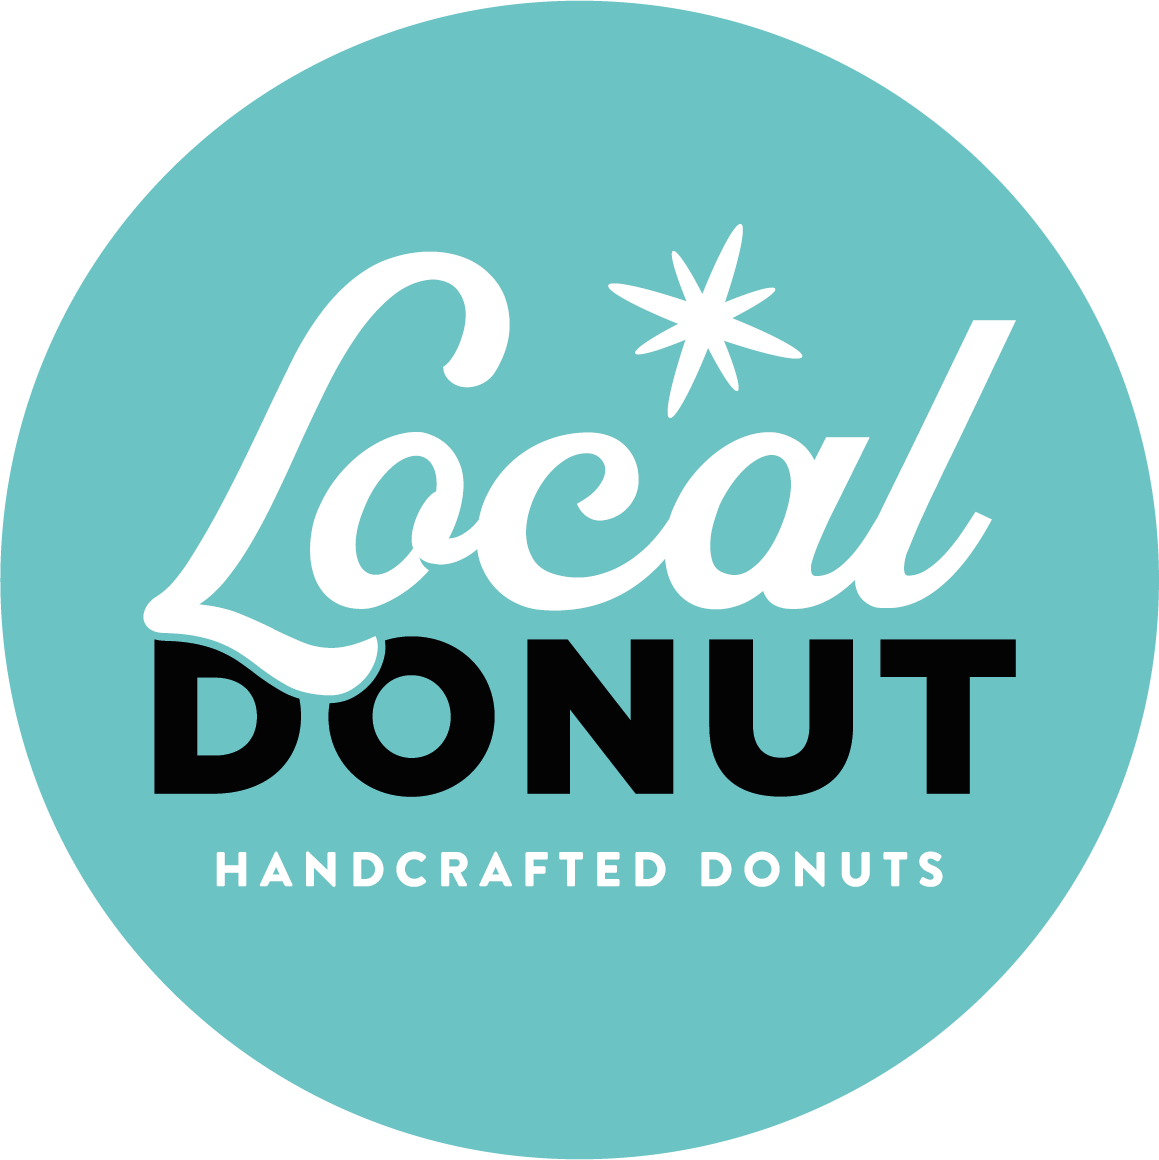 Local Donut